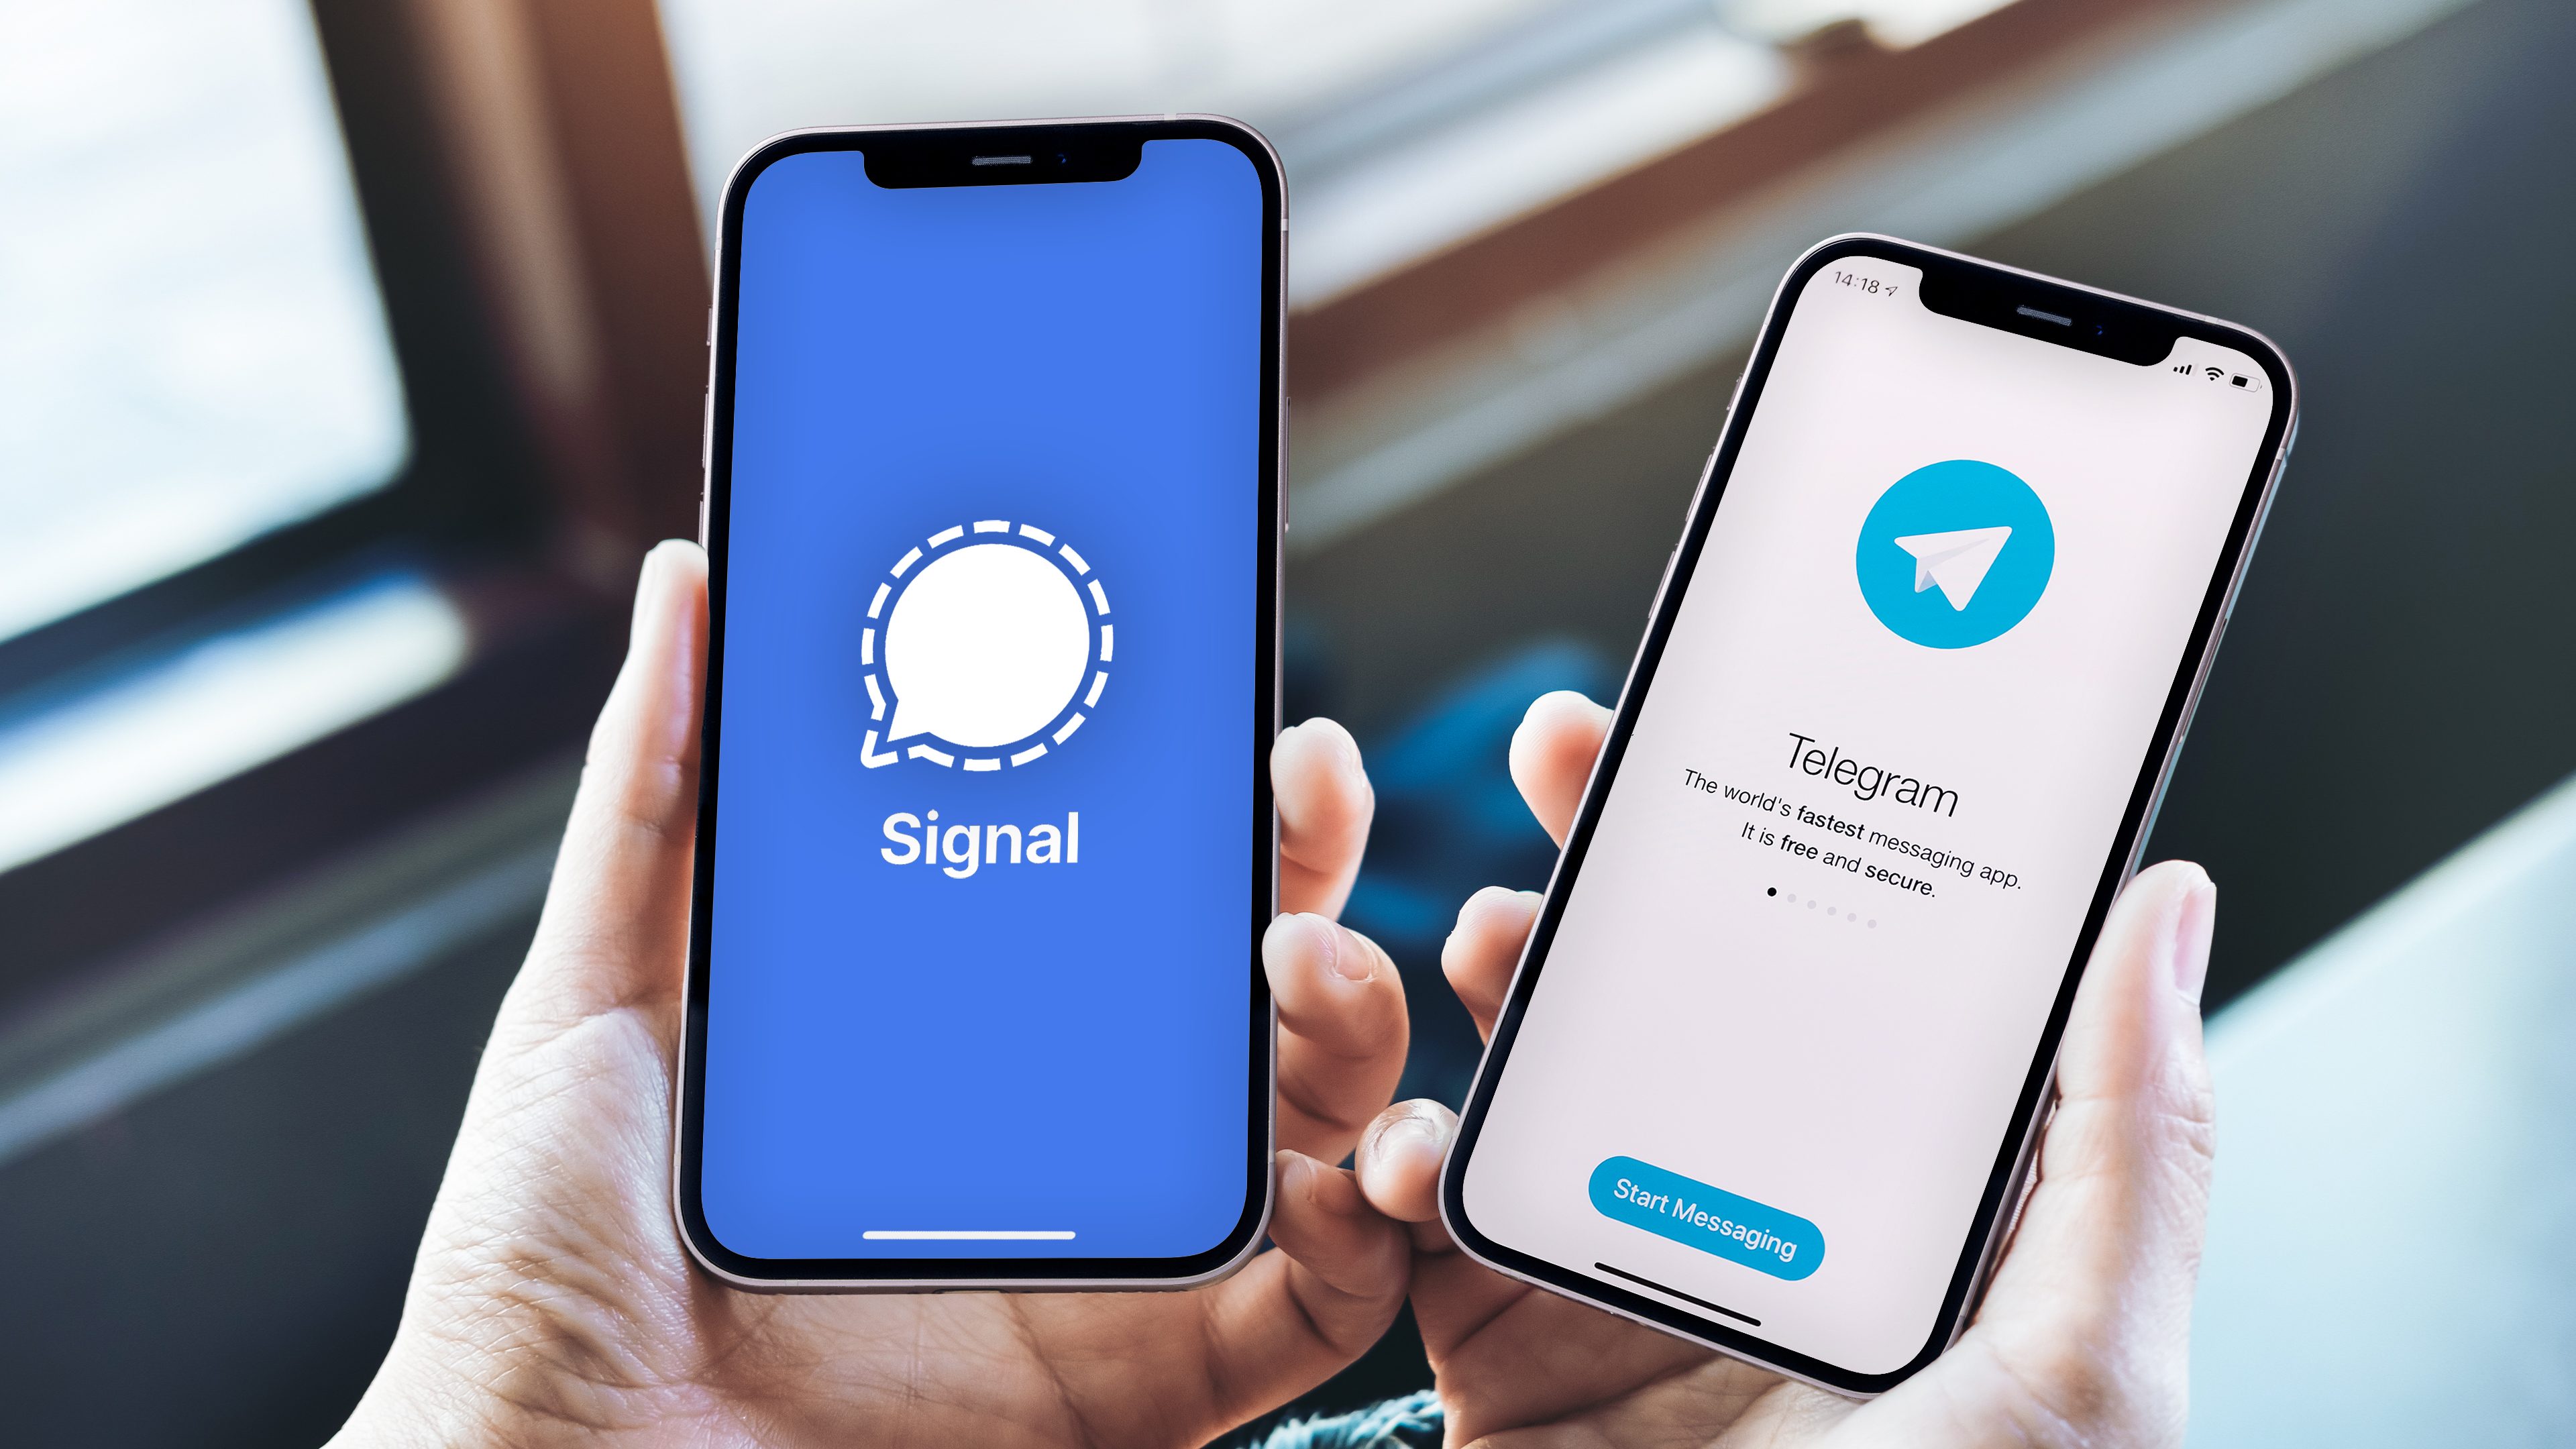 signal messenger app user guide